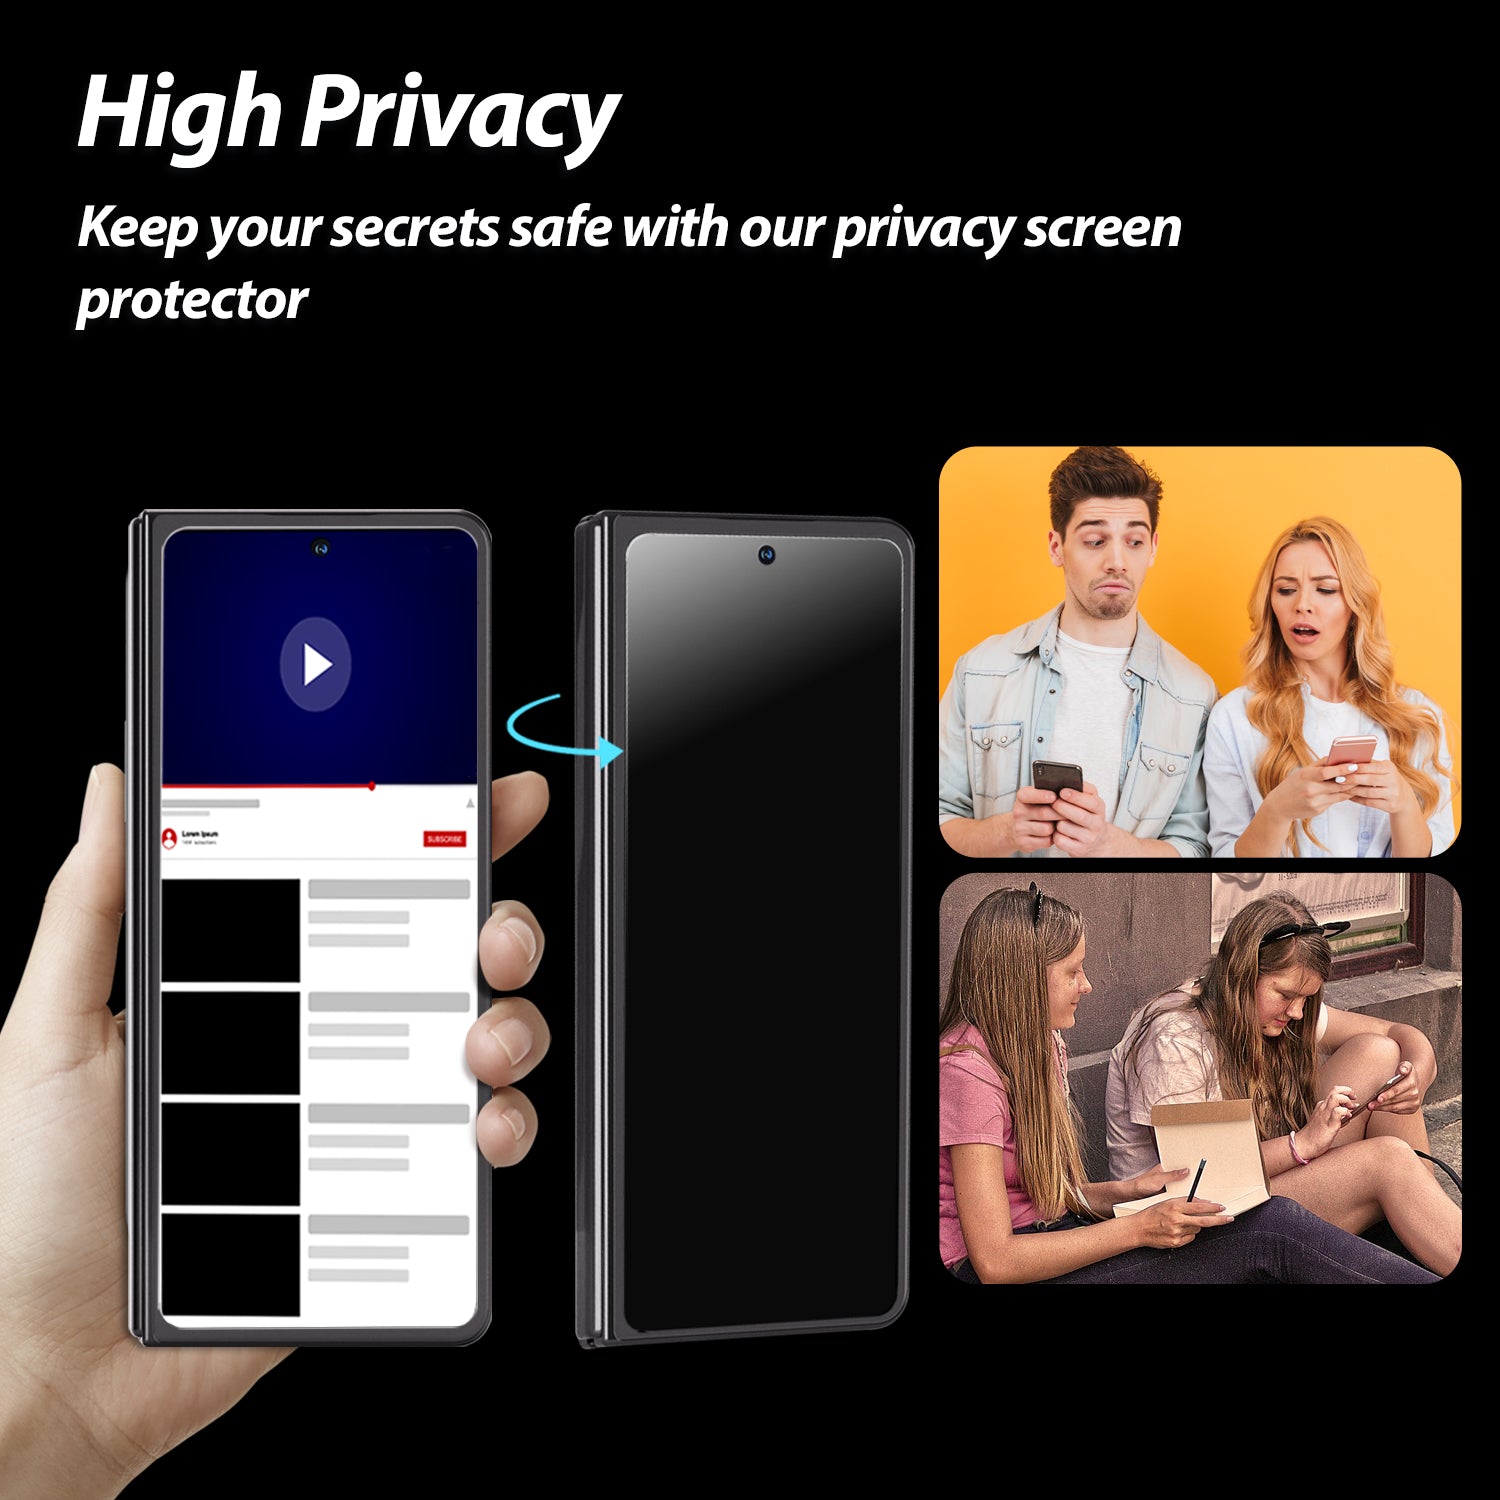 EA Privacy Glass Screen Protector Samsung Galaxy Z Fold 5 (2 Stück)